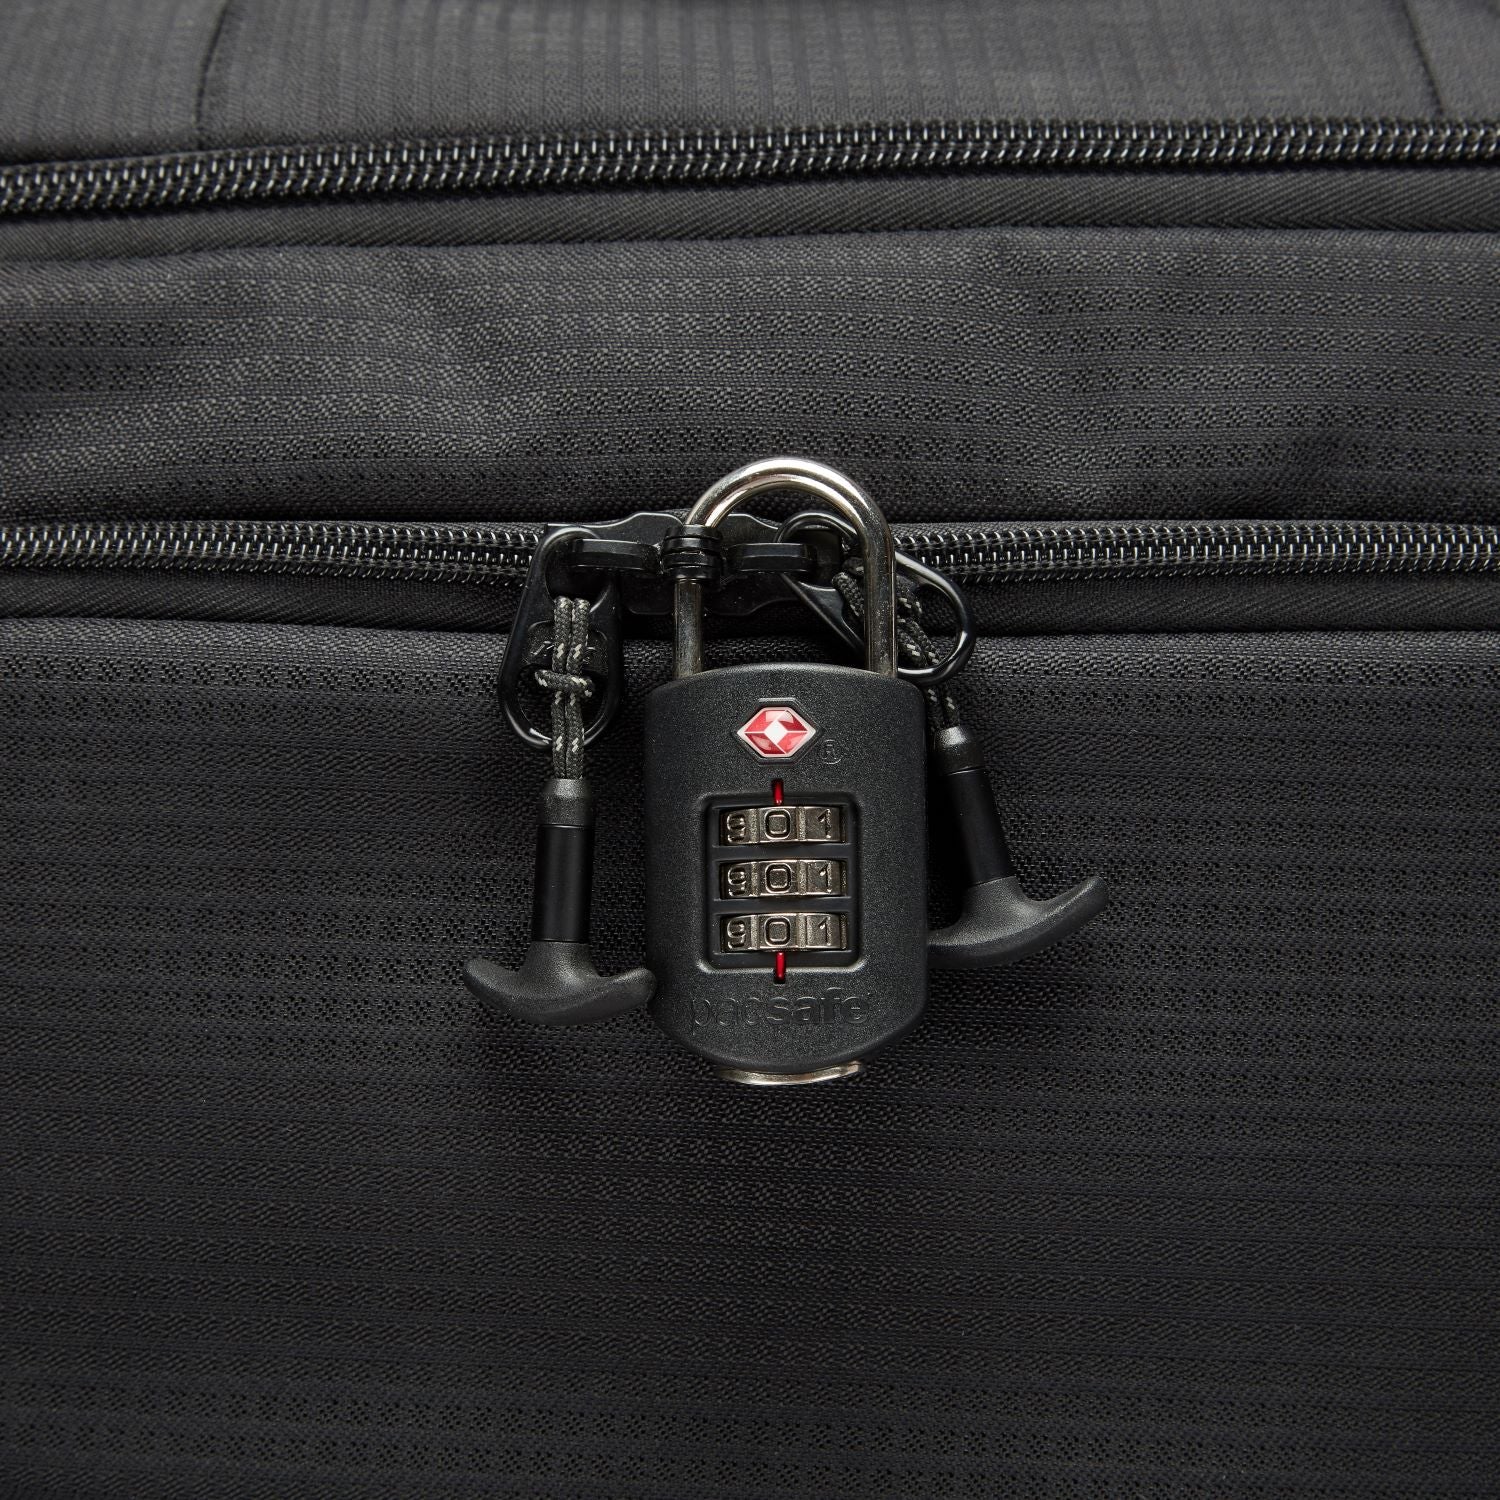 Combination Lock Travel Padlock Locker 3 digit Security Suitcase Luggage Bag  Gym | eBay